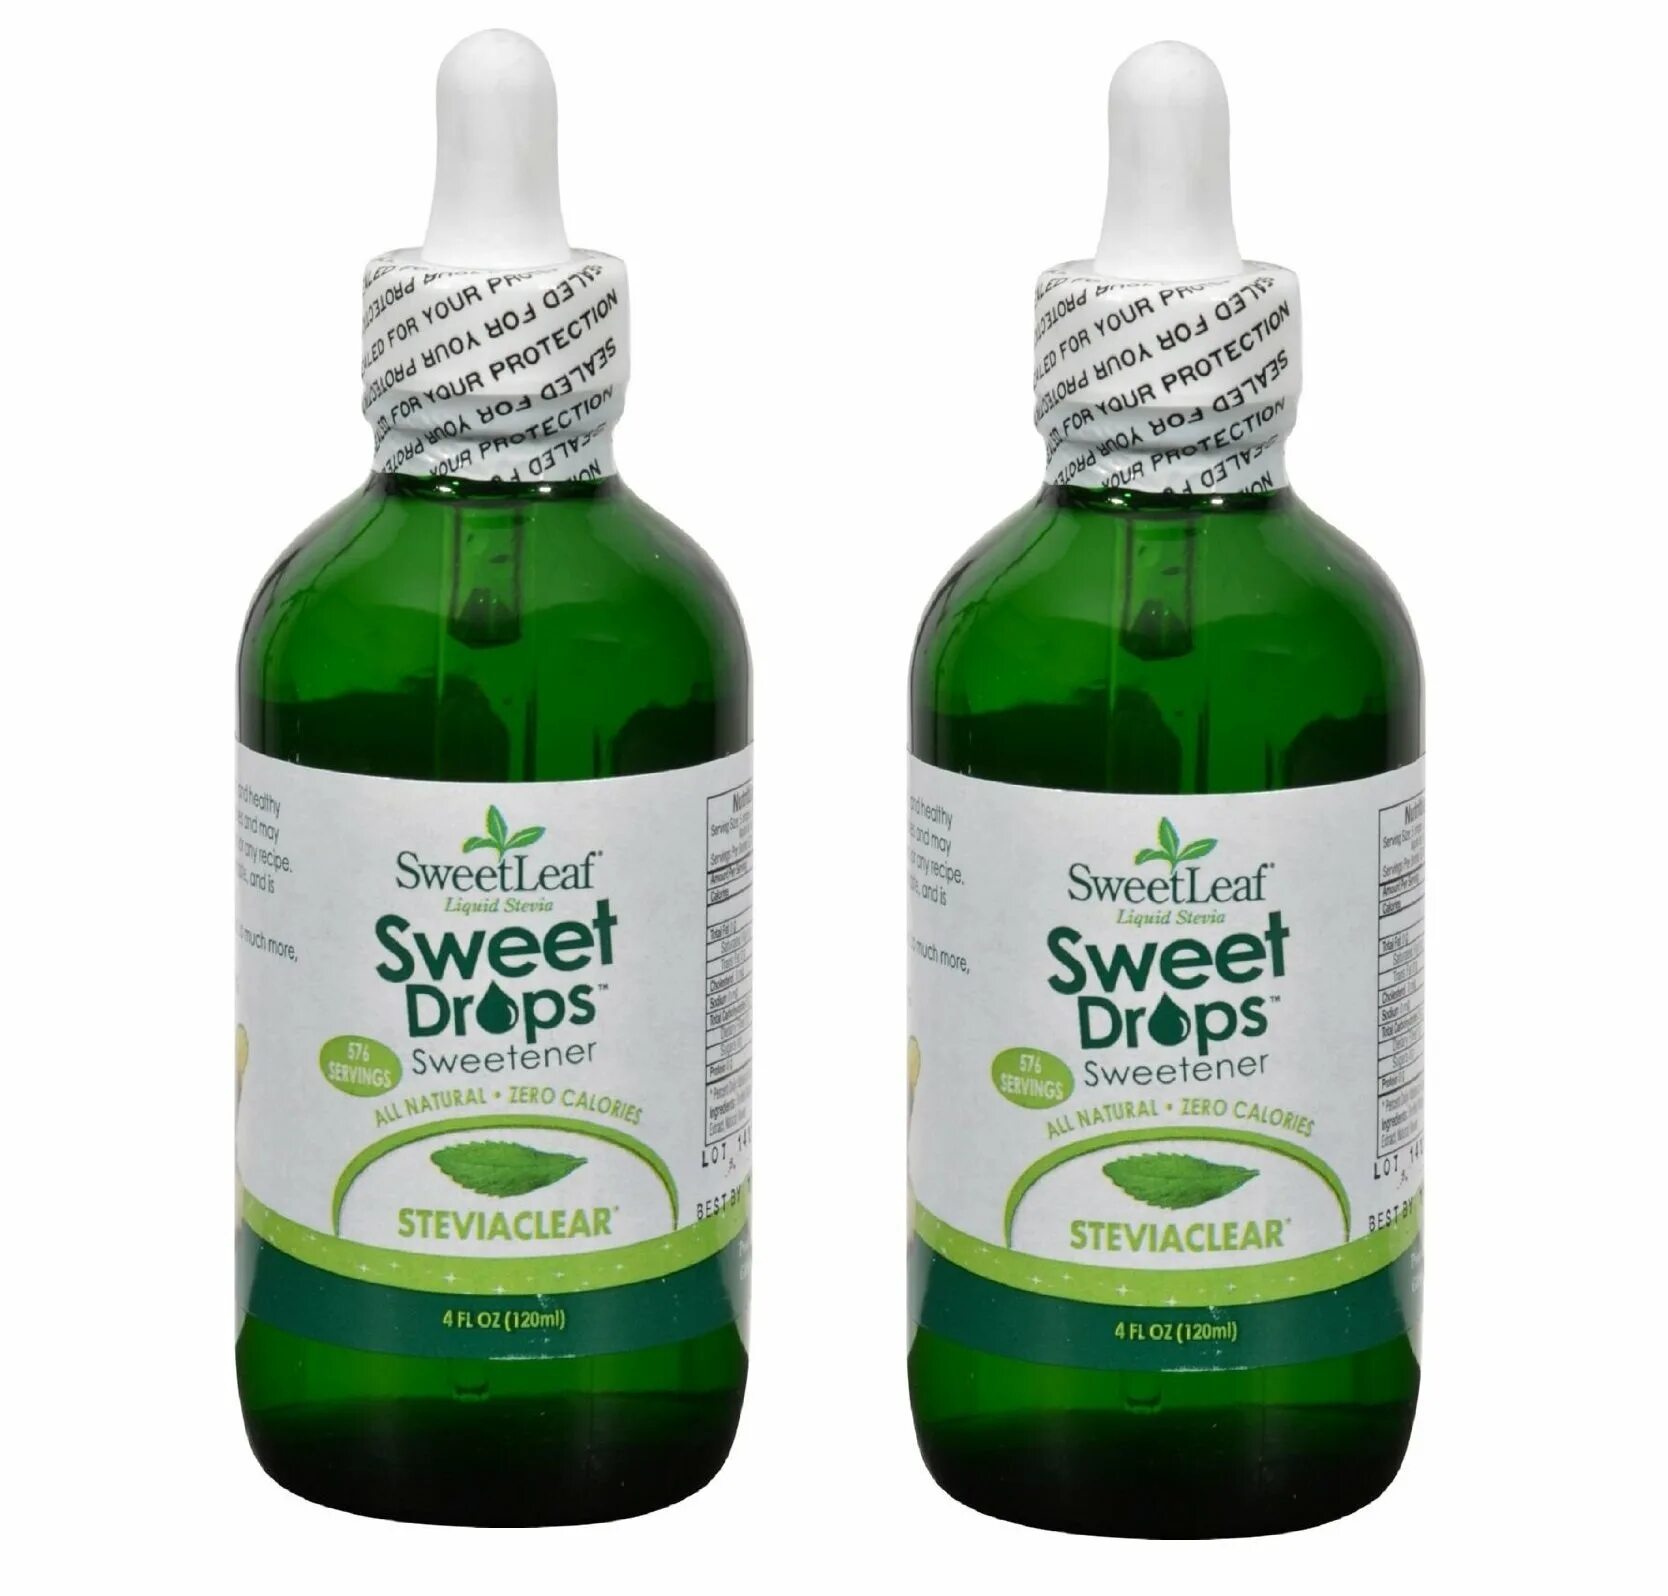 Sweet leaf. Better Stevia жидкая. DCARE Stevia Liquid. Stevia в жидком виде. Жидкая стевия зеленая натуральная.